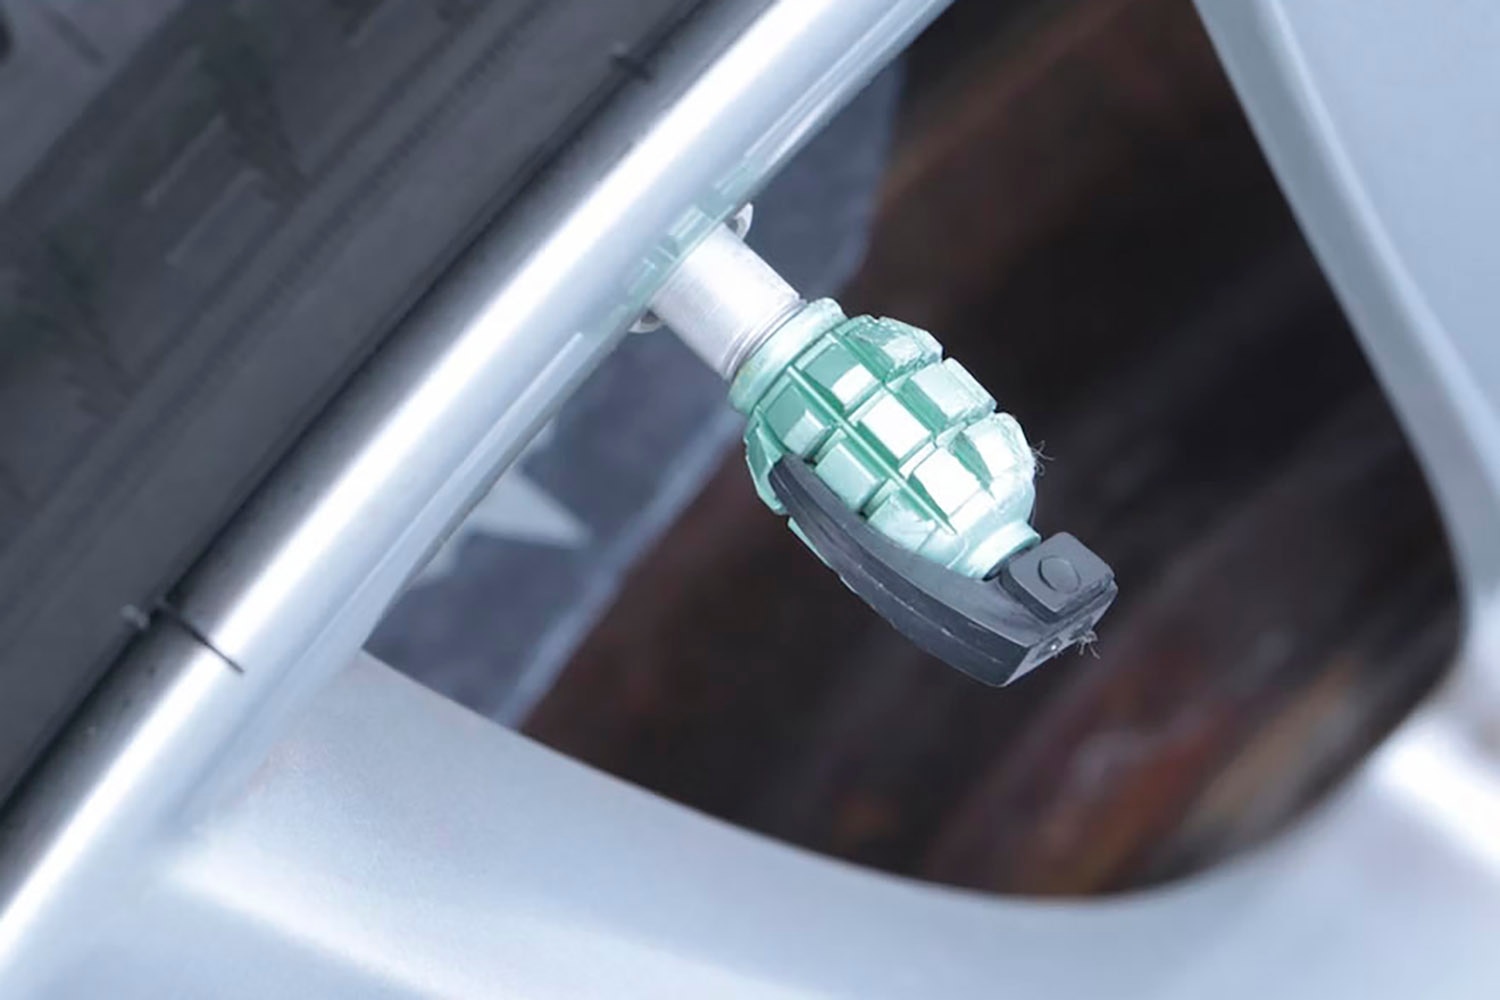 Detail of grenade valve stem cap on Tesla Model S owned by Jack White